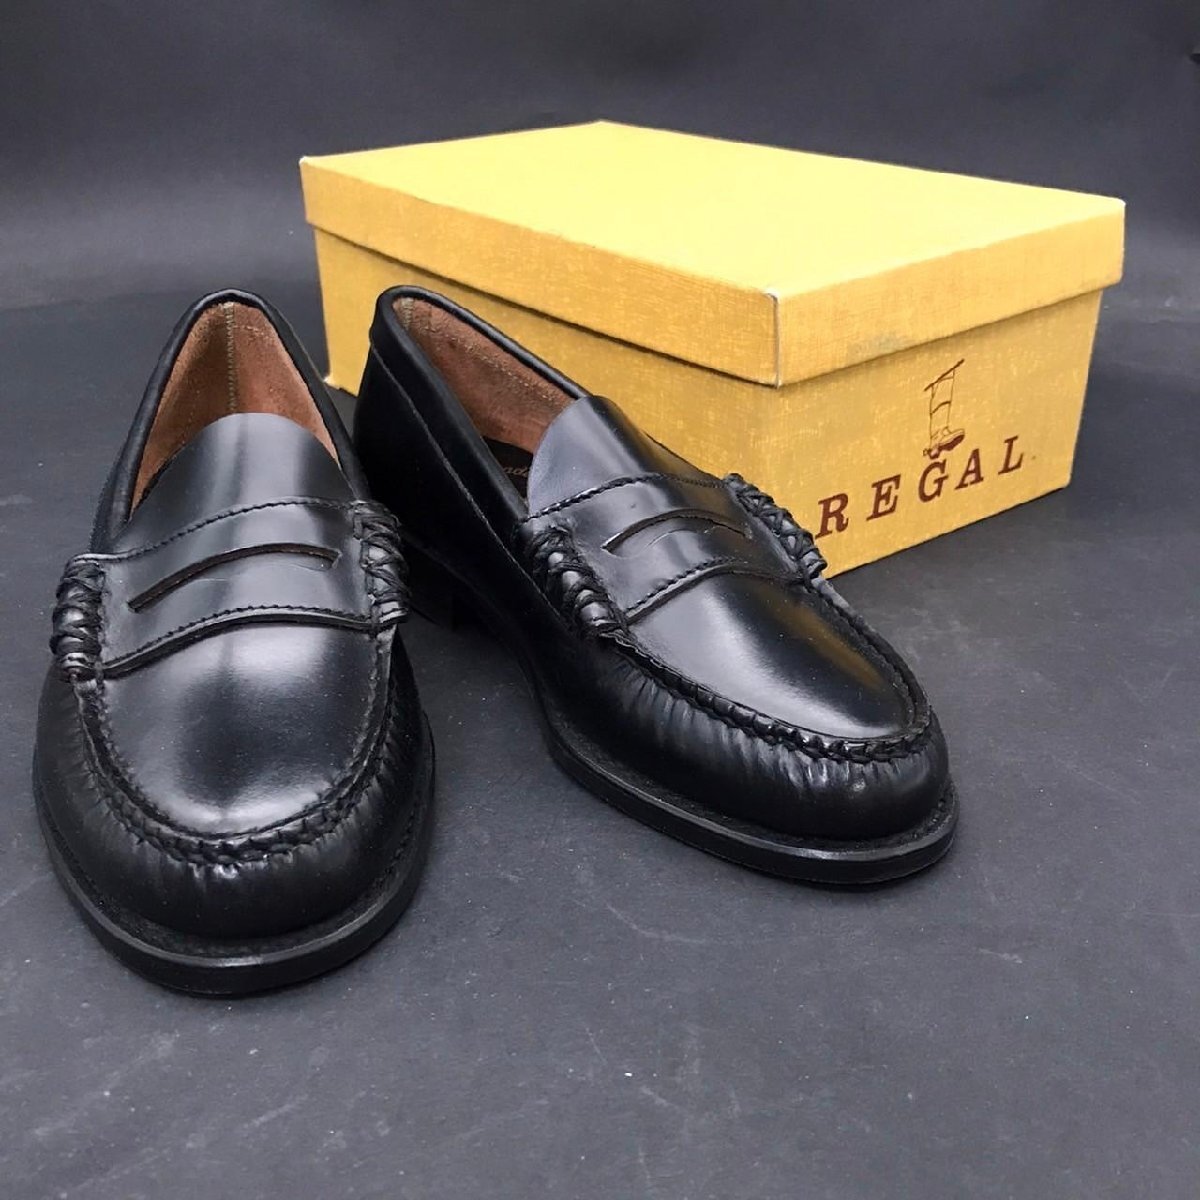 ER0221-19-4 REGAL ローファー リーガル 22サイズ ブラック レザー 米国ブラウン社 革靴 FLEXIBLE 学生靴 黒 60サイズの画像1